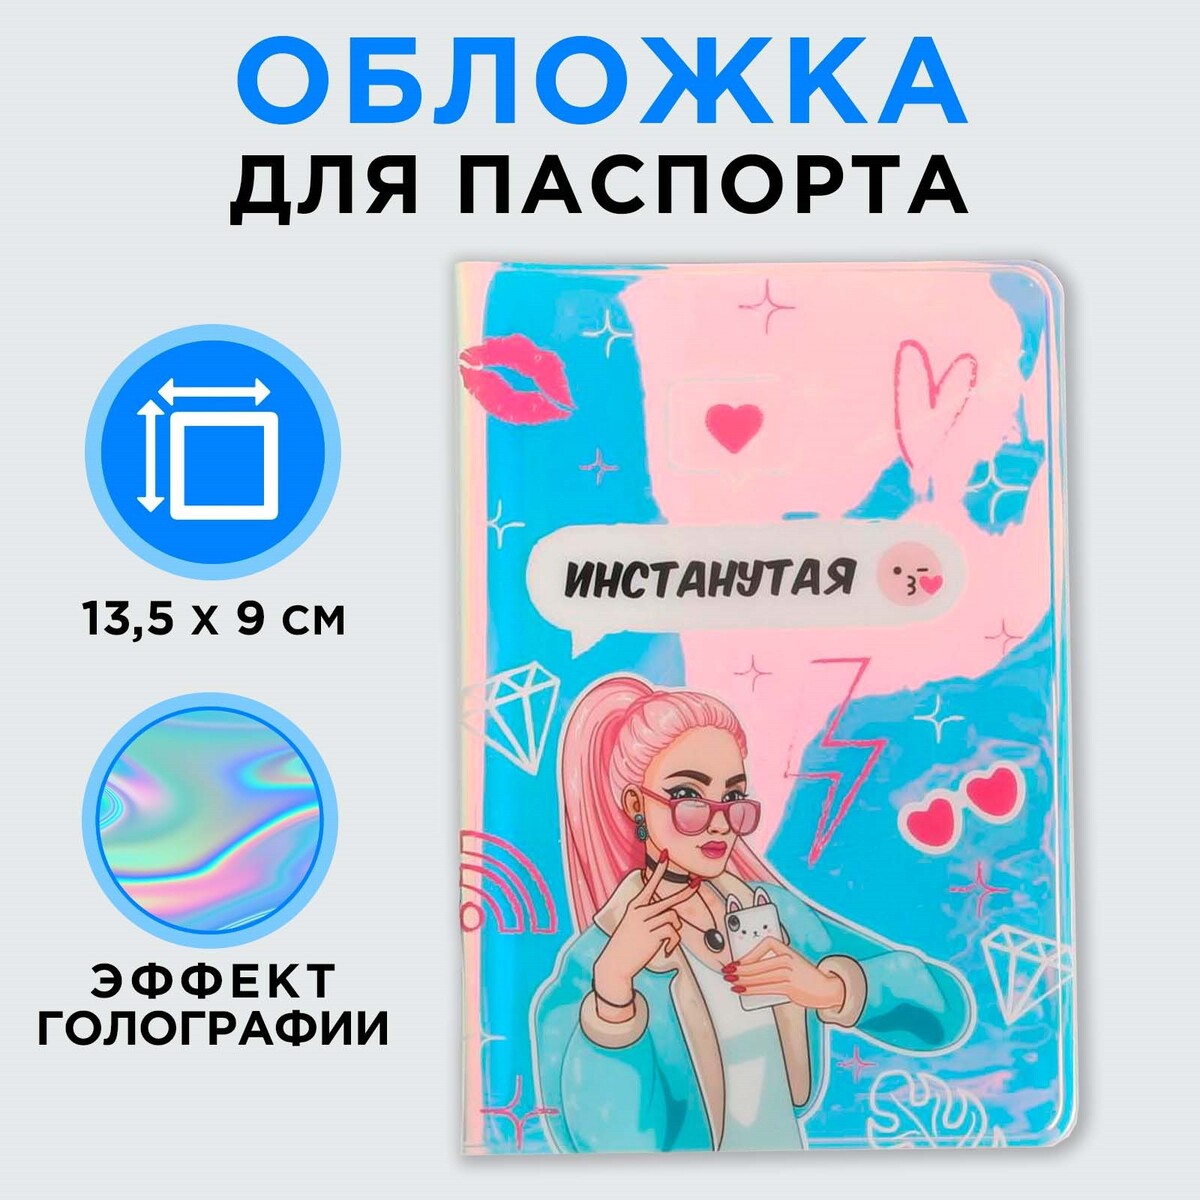 Голографичная паспортная обложка Beauty Fox